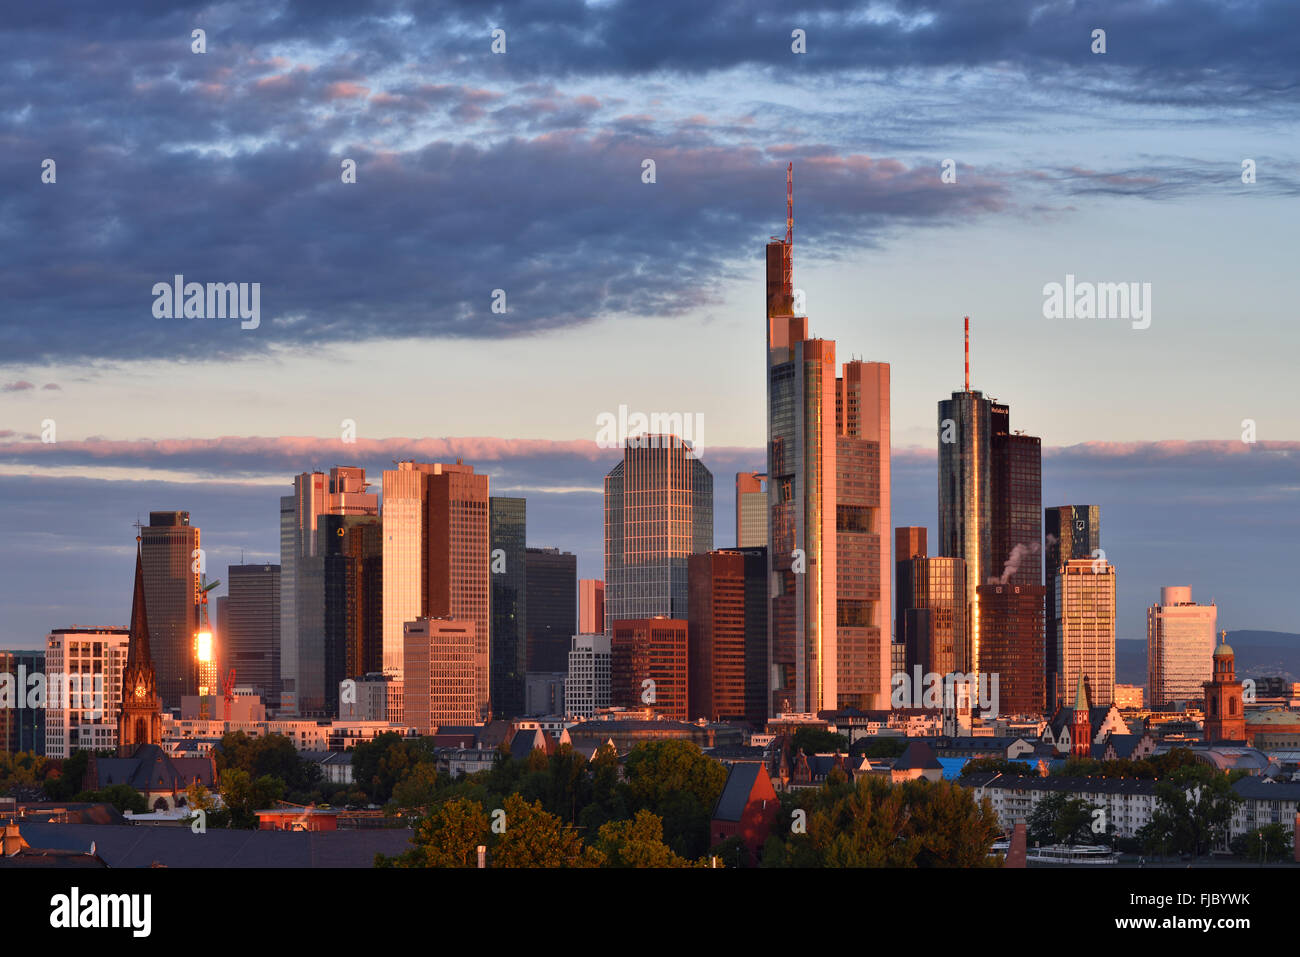 Skyline, Financial District at sunrise, TaunusTurm, Tower 185, Commerzbank, Messeturm, Helaba Hessische Landesbank, German Bank Stock Photo